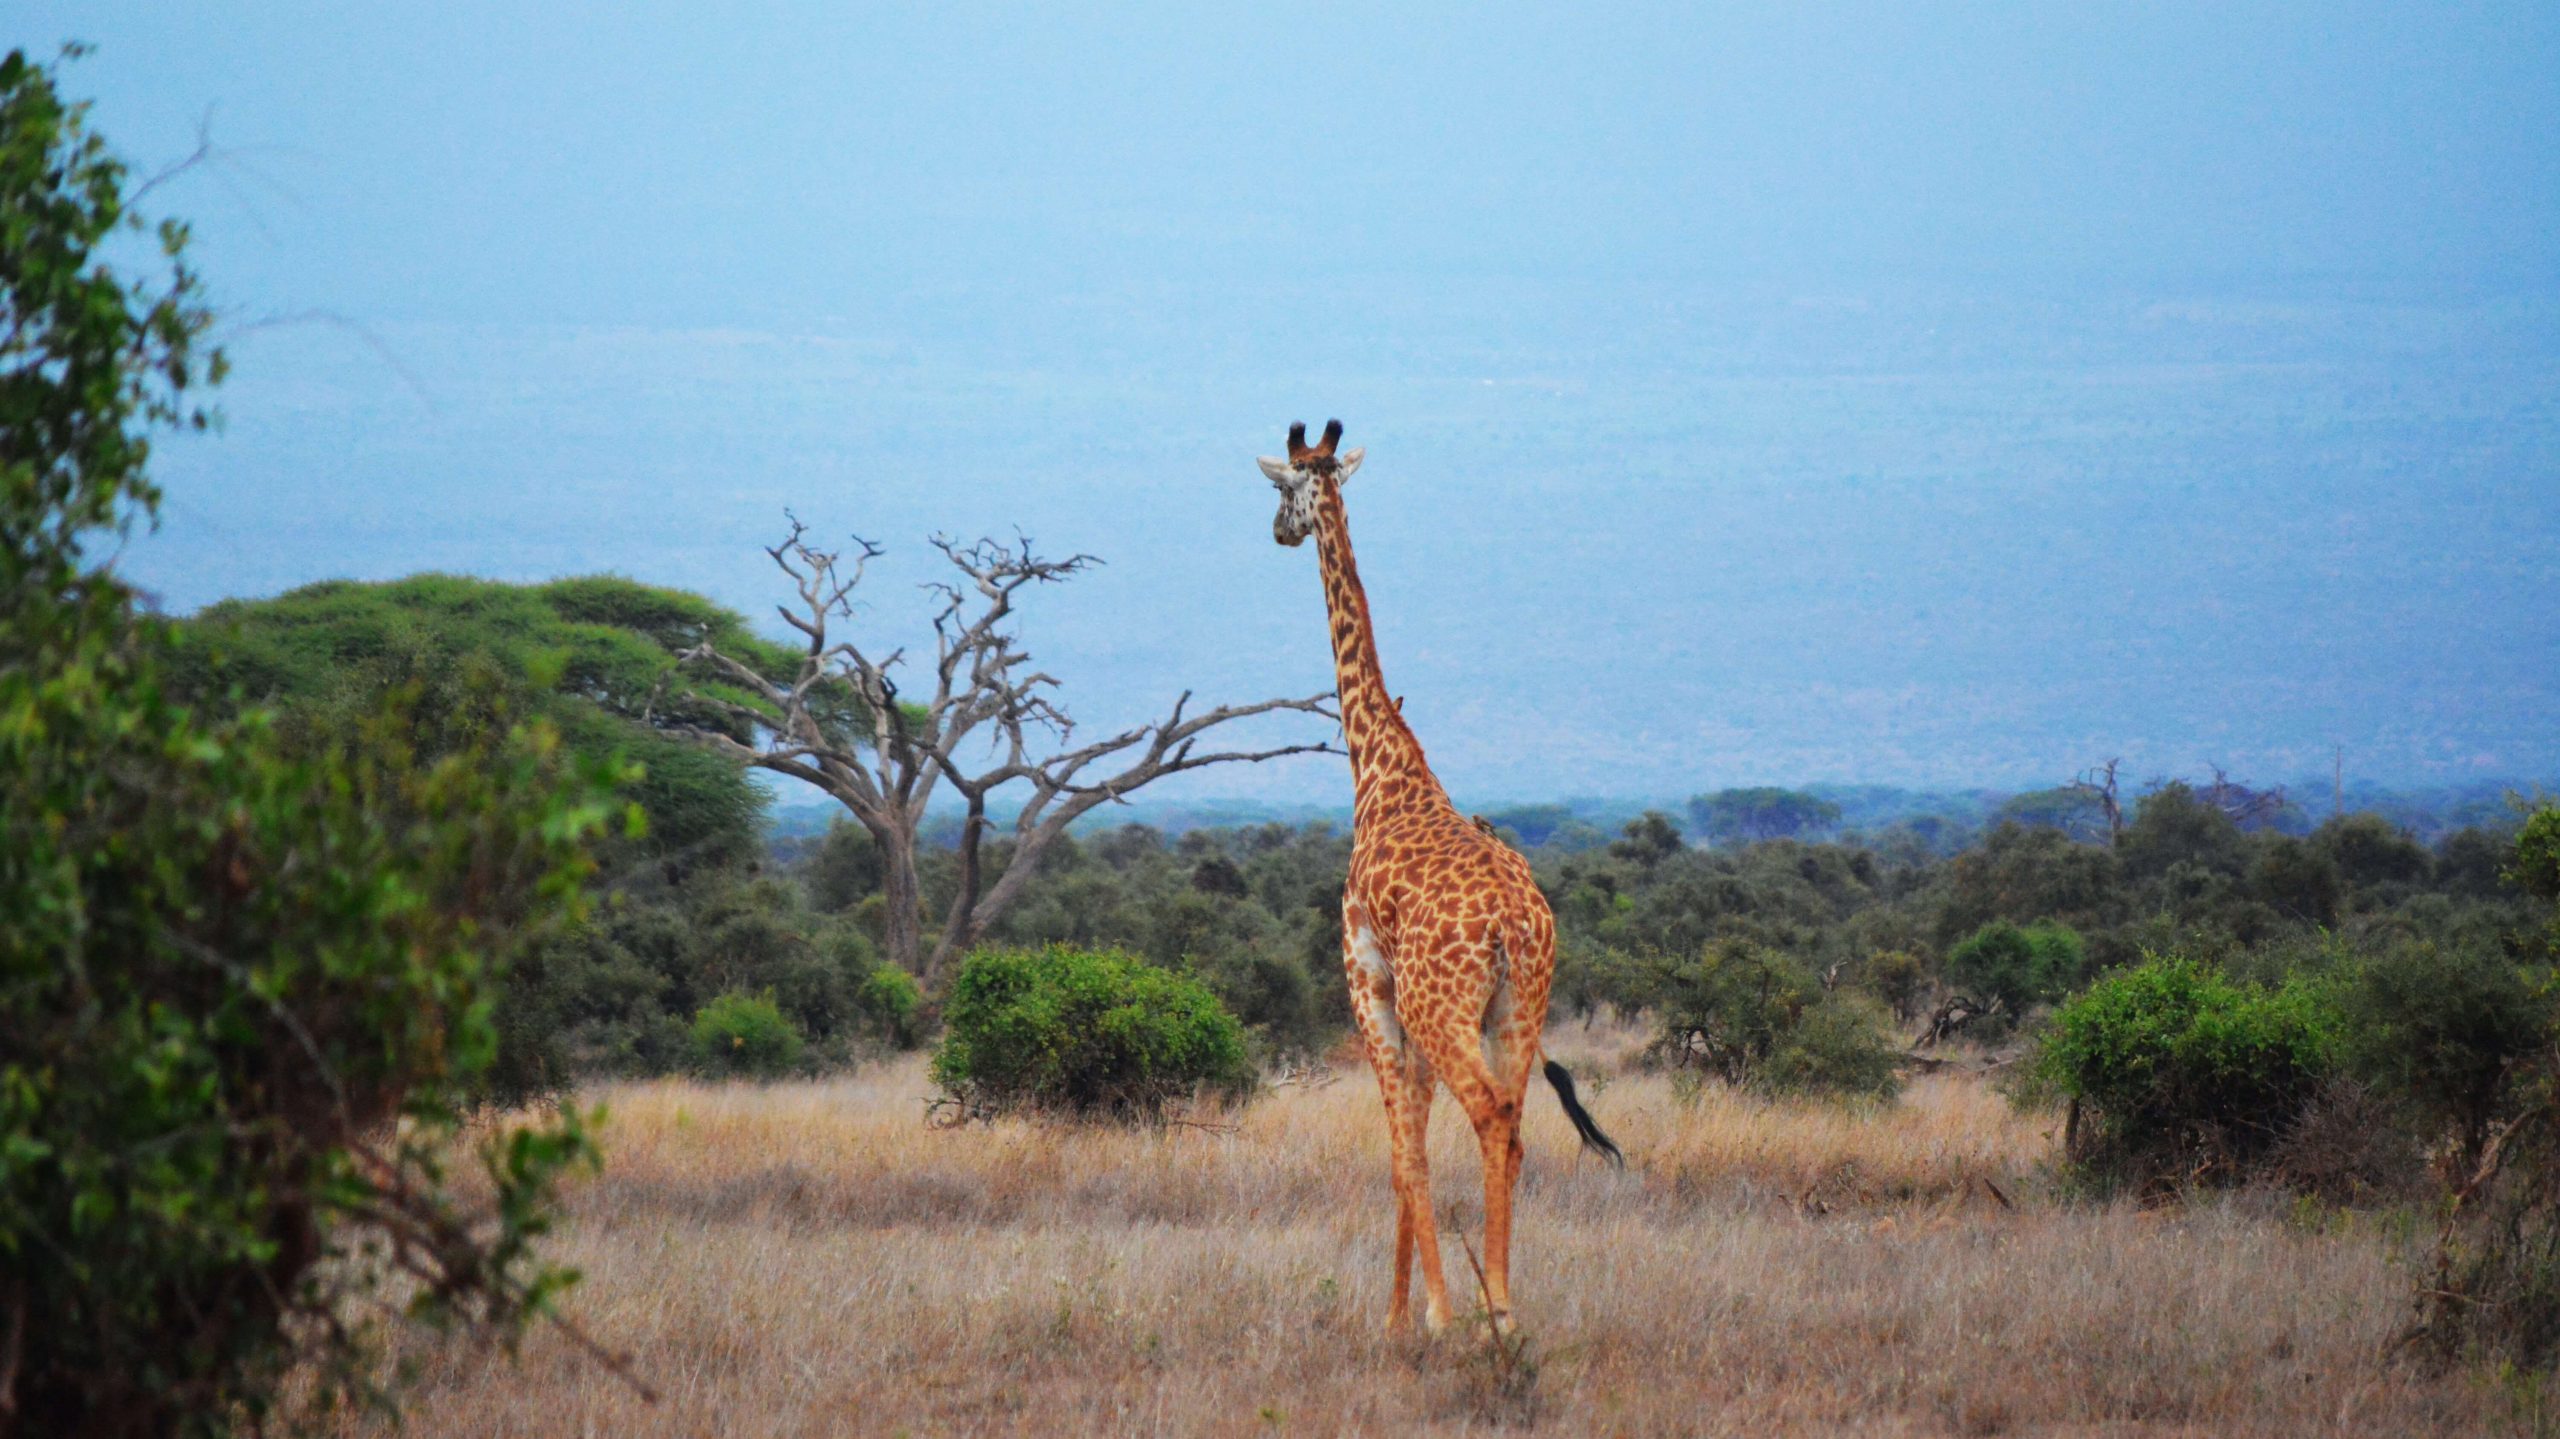 Girafe courant dans la savane en Ouganda, Image tiré d'un safari